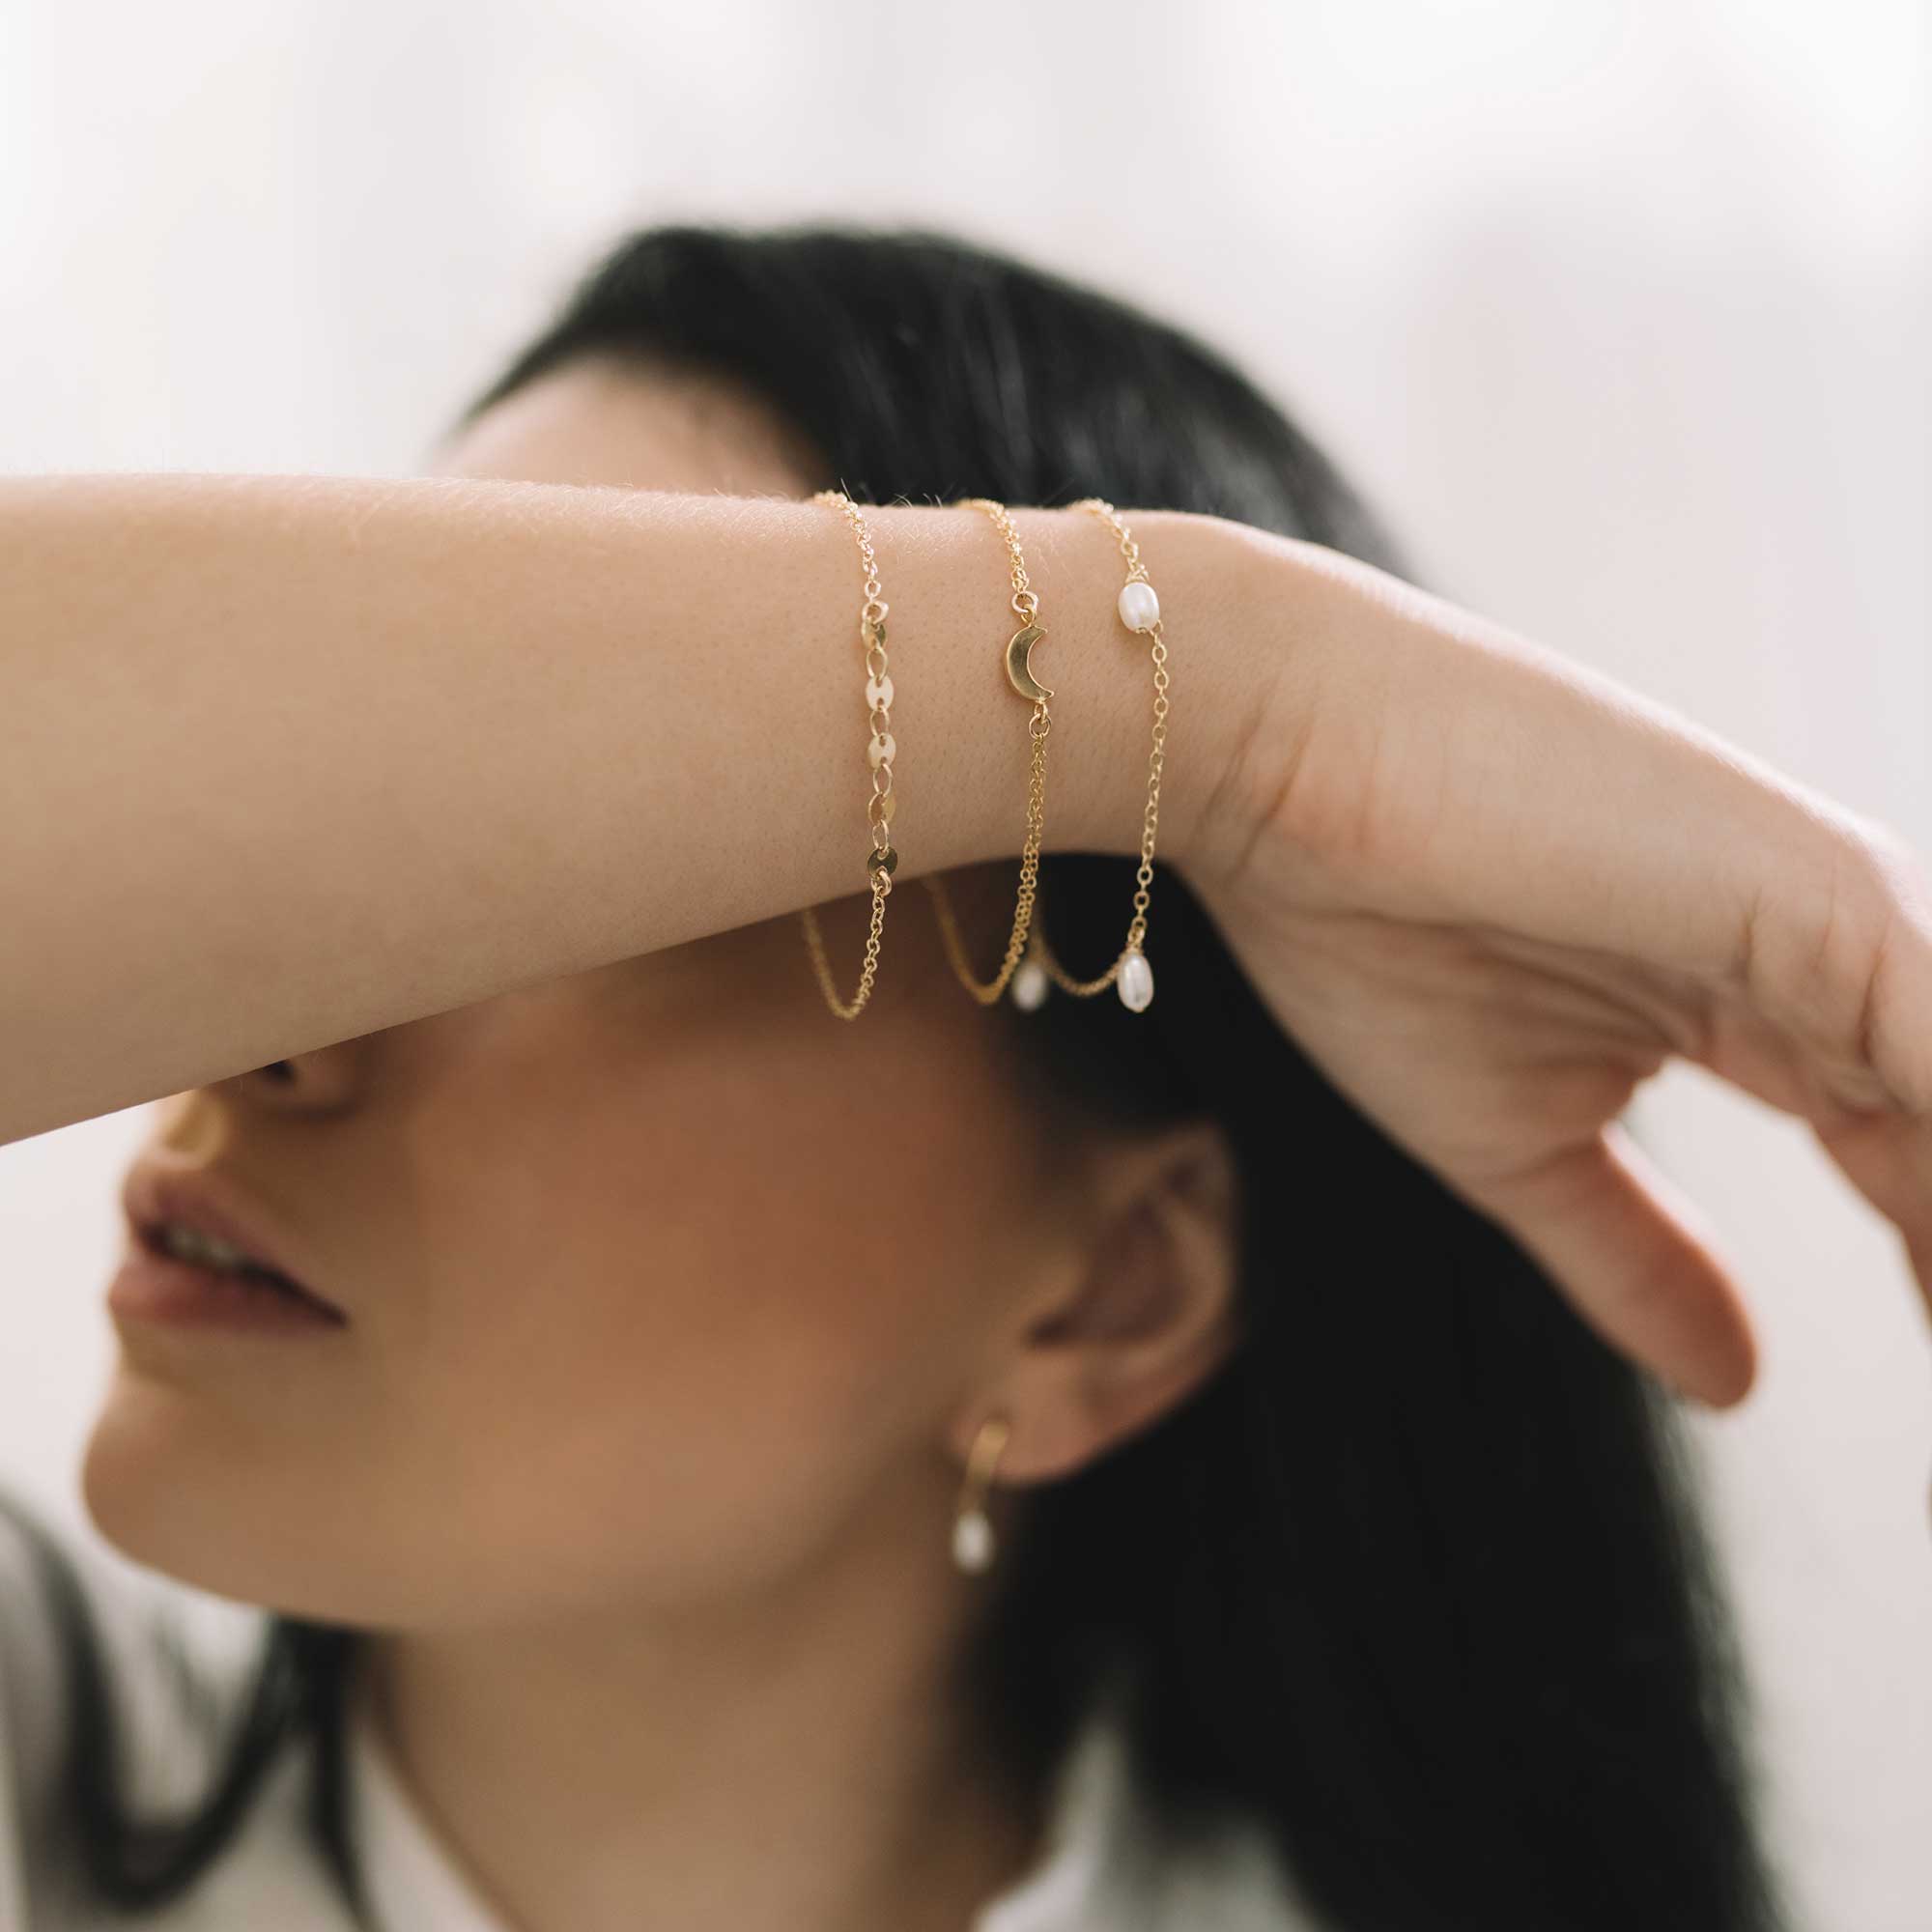 14k gold filled bracelets sandrine devost jewelry montreal designer